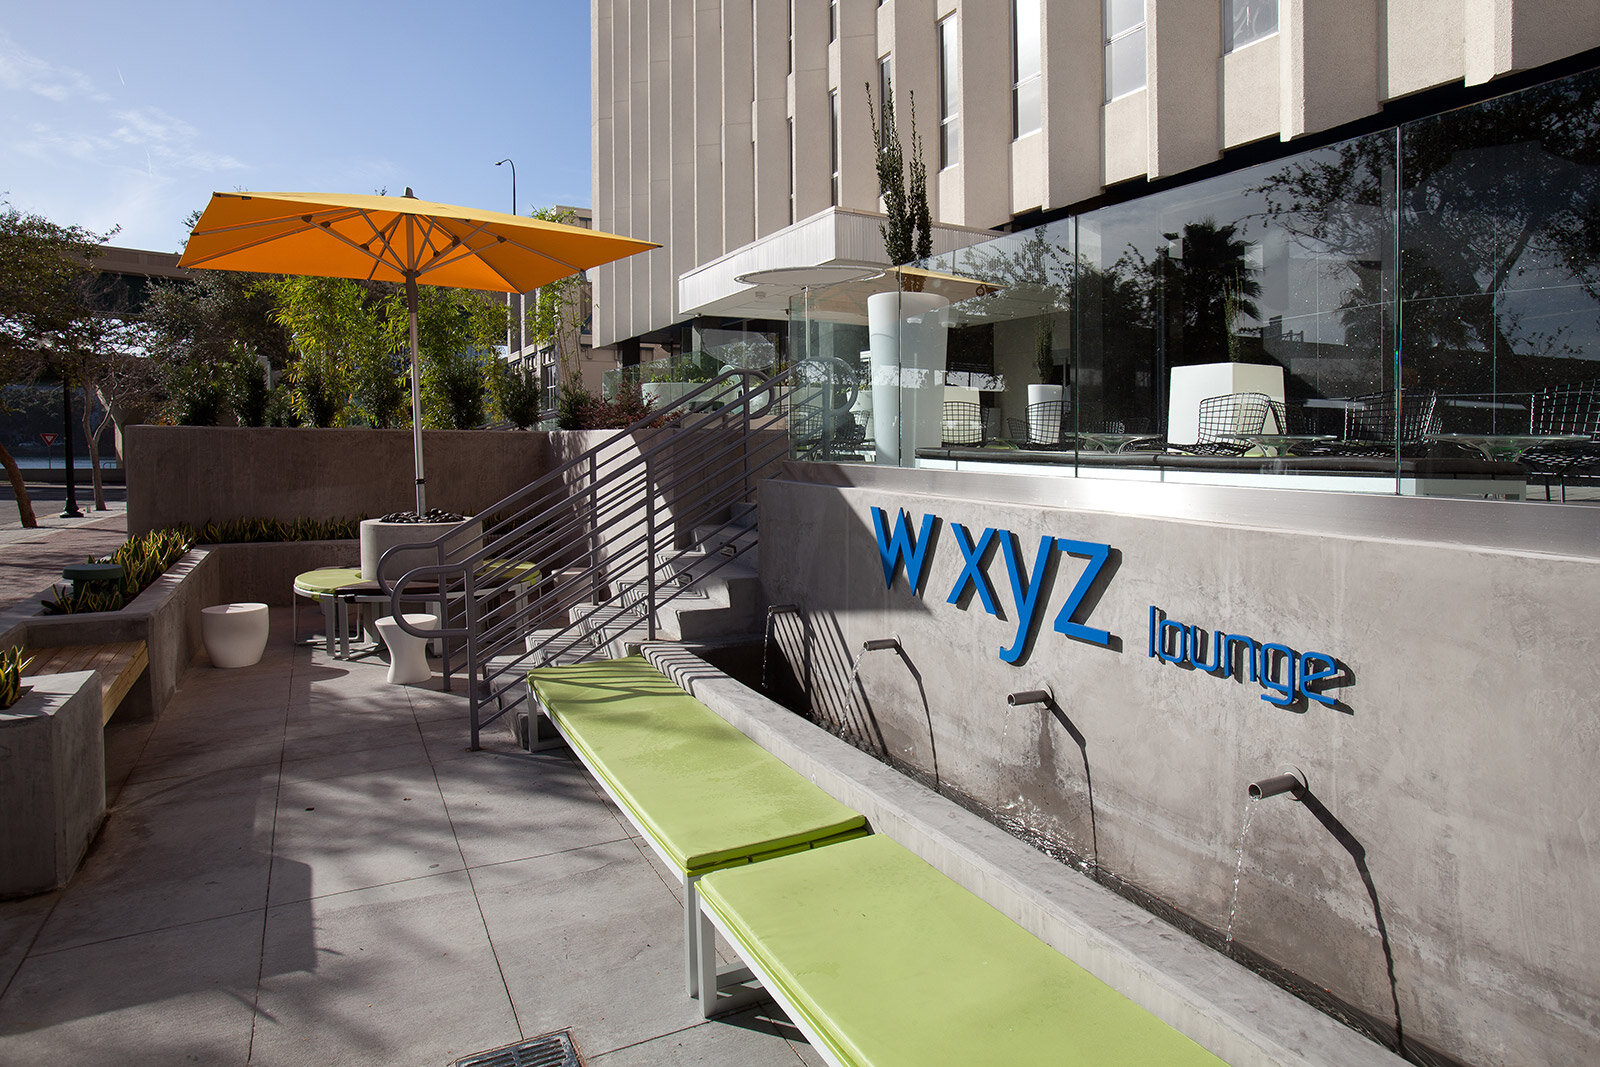 Exterior signage for the WXYZ Bar